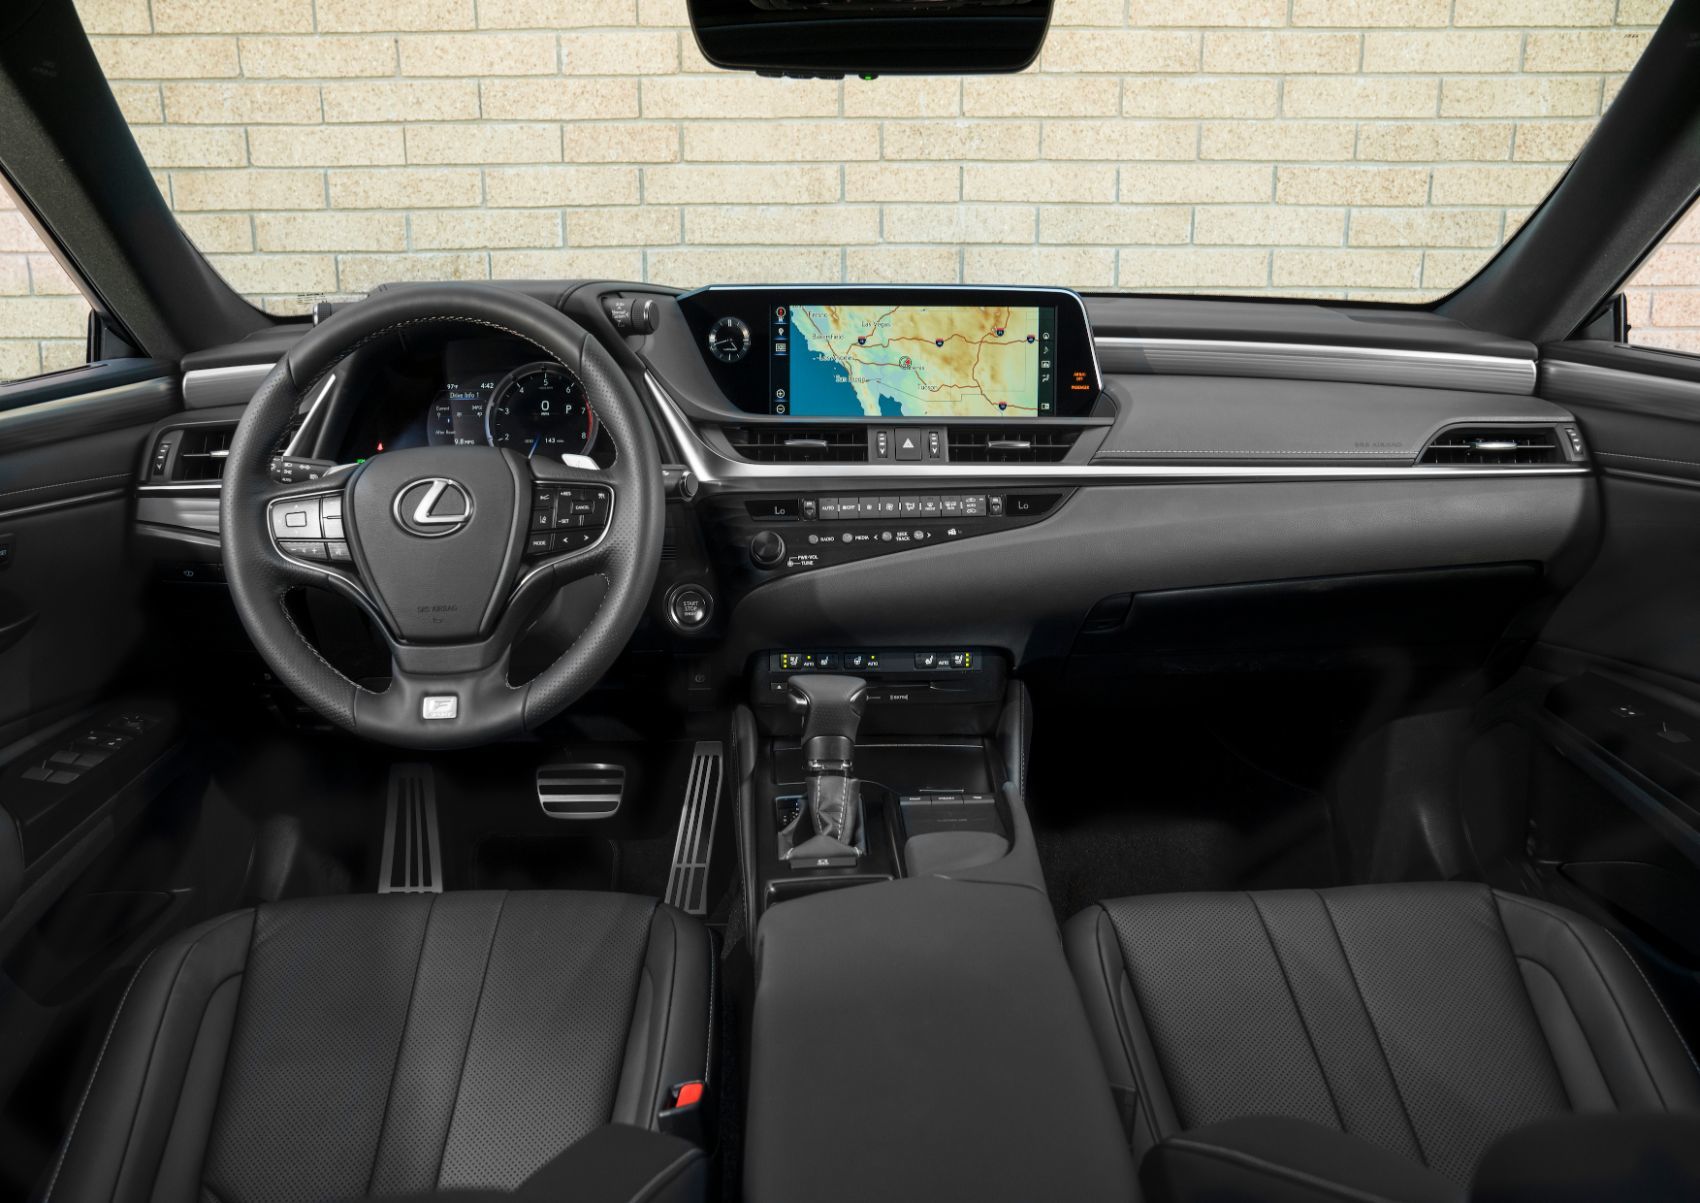 2020 Lexus ES interior layout.